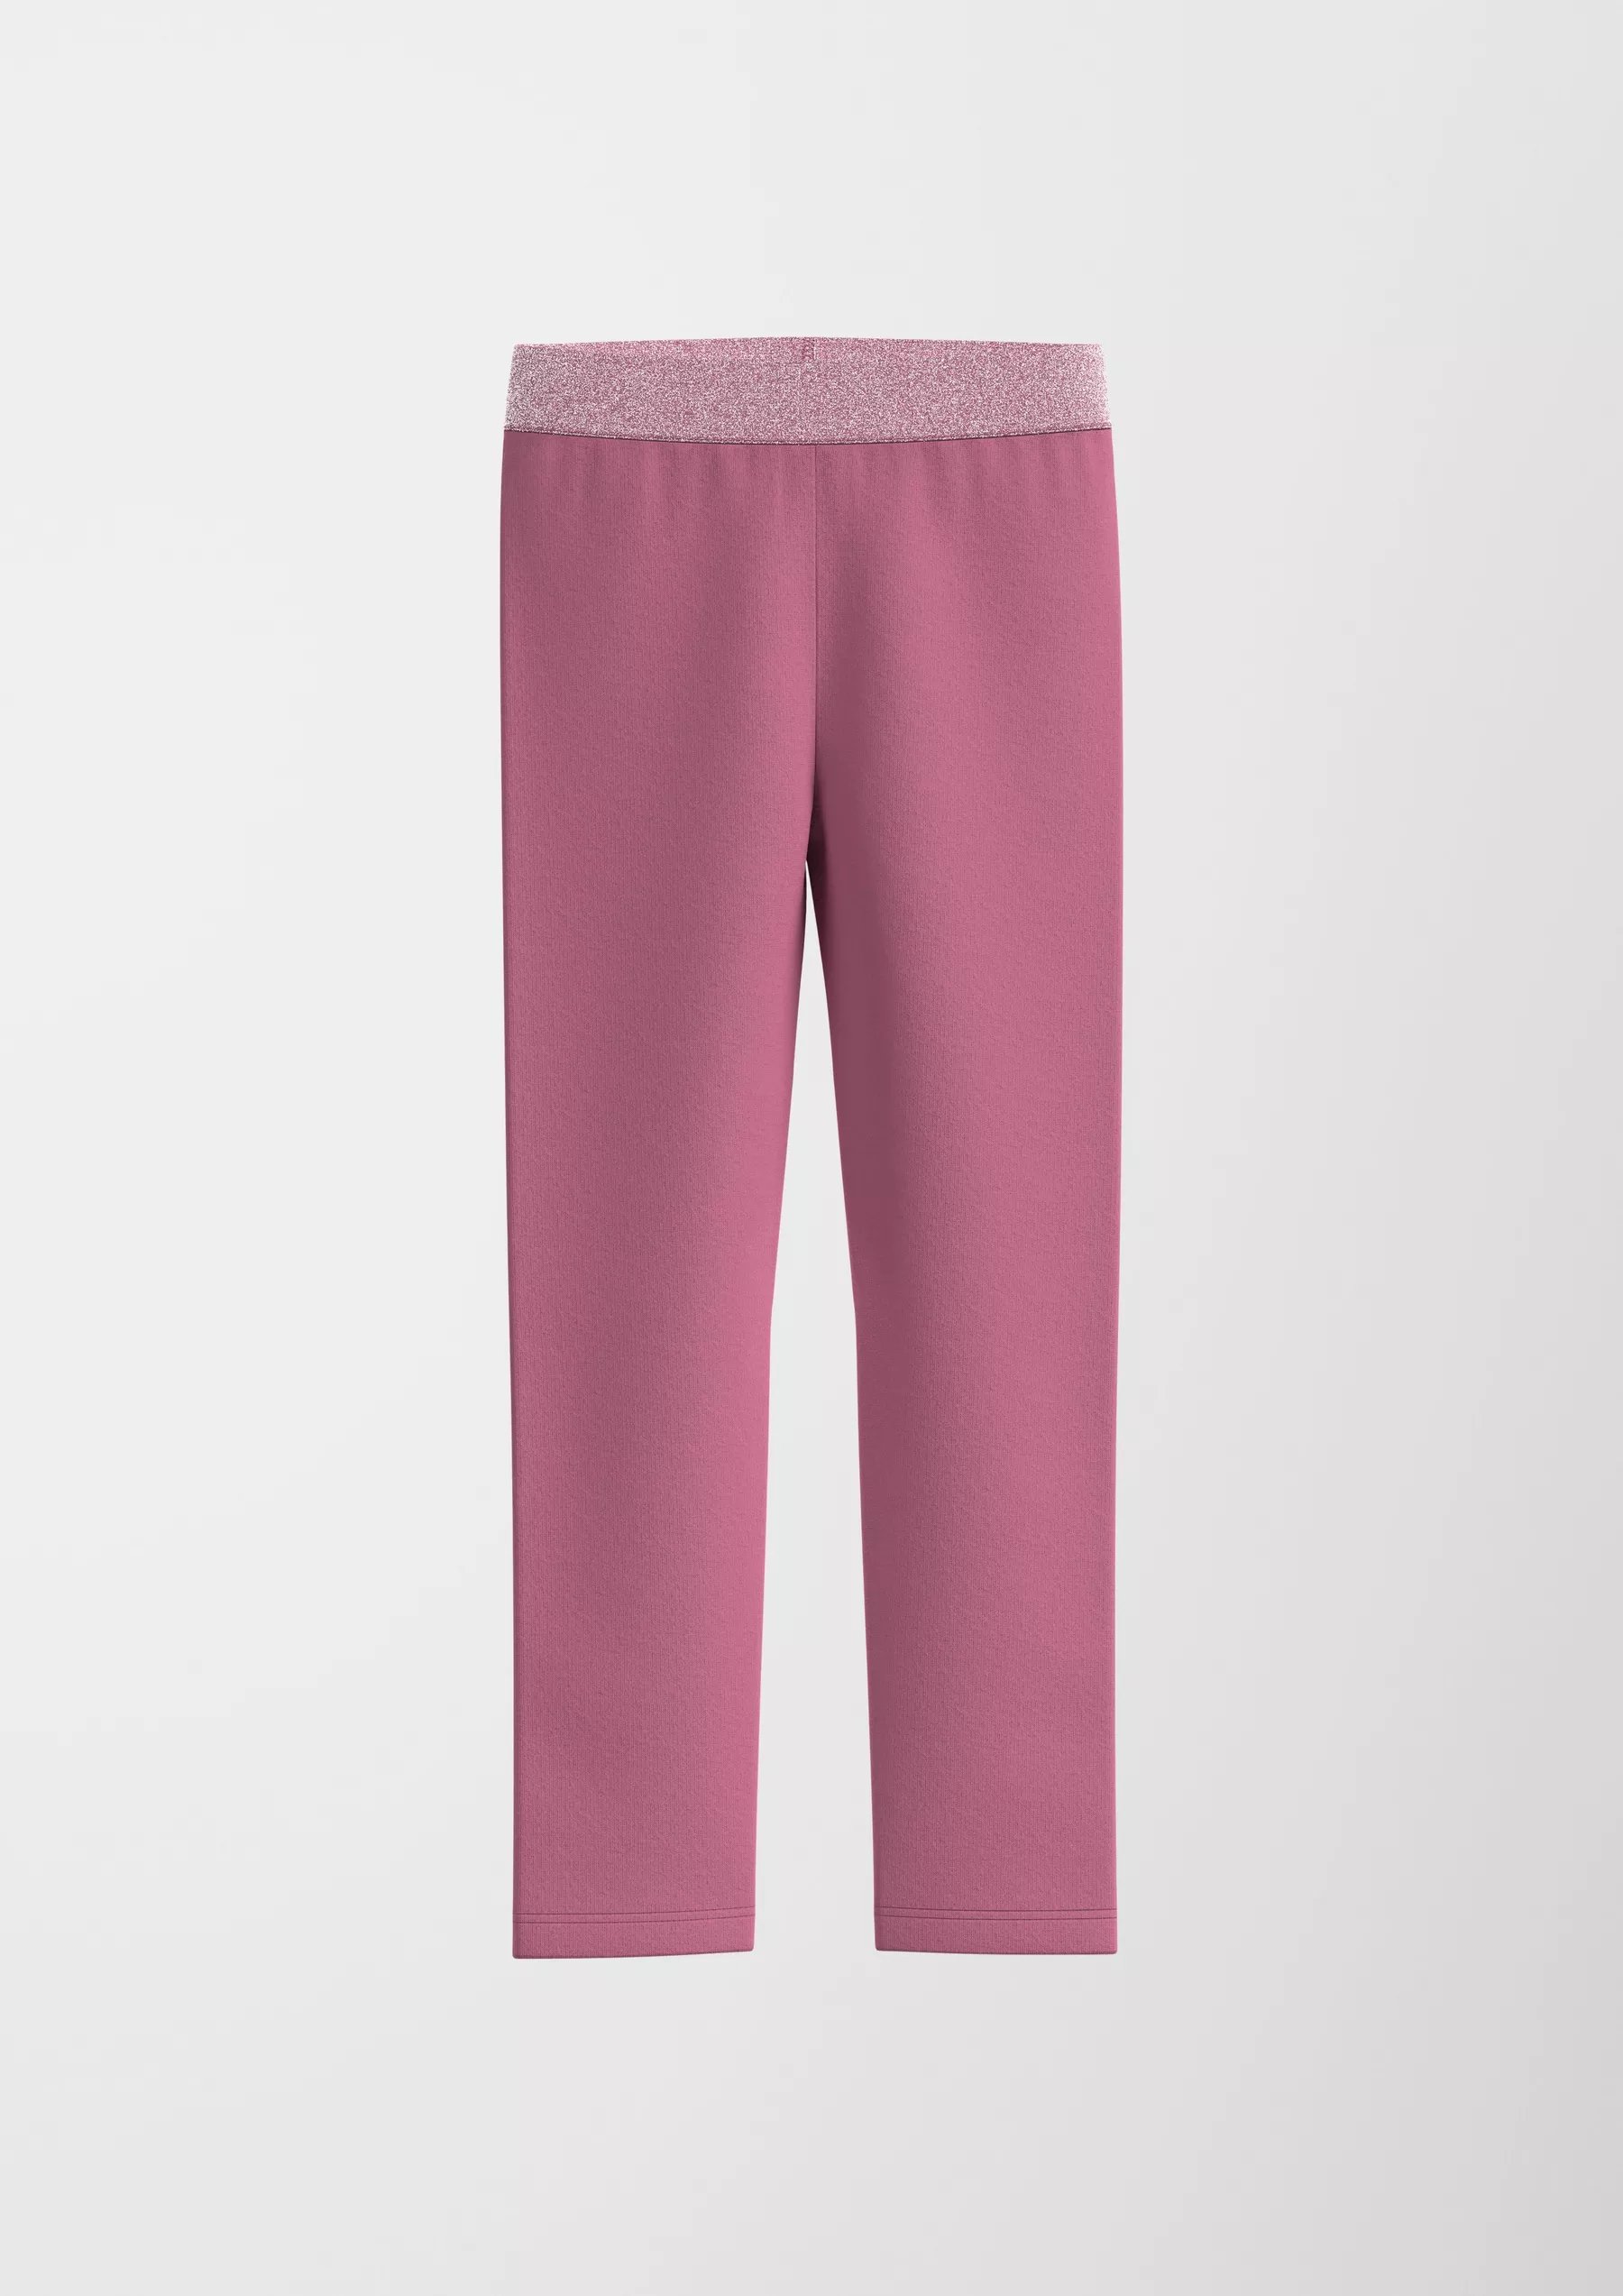 Лосины QS by s. Oliver для девочек, размер 134, розовый, 2133919 лосины soft cover beself розовый